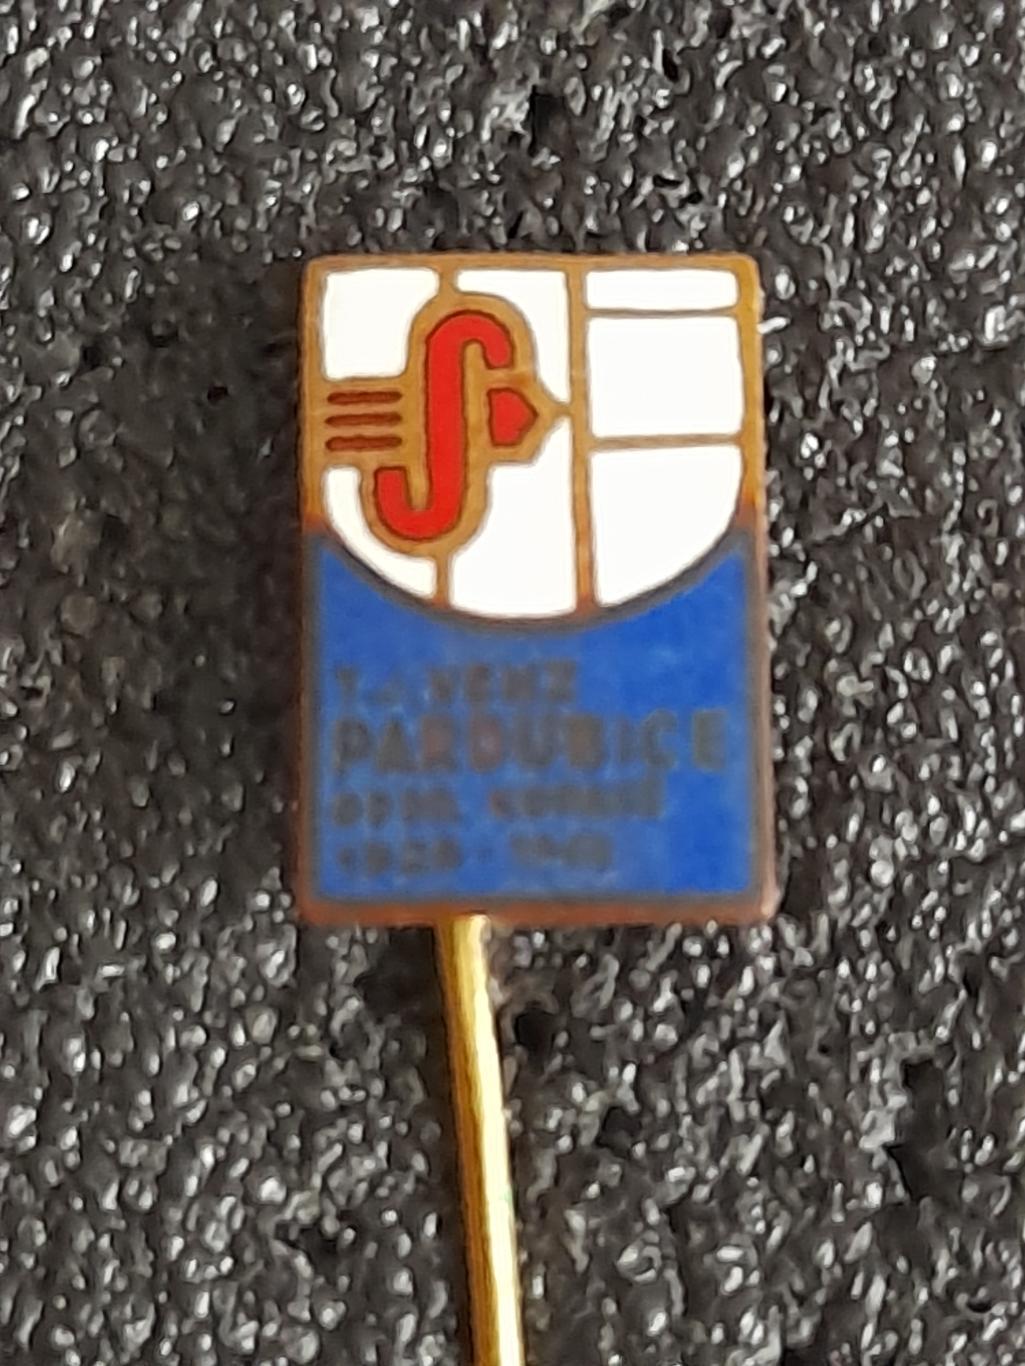 ФК Пардубіце, Чехословаччина/FC Pardubice, Czechoslovakia/ 60-тi рр.